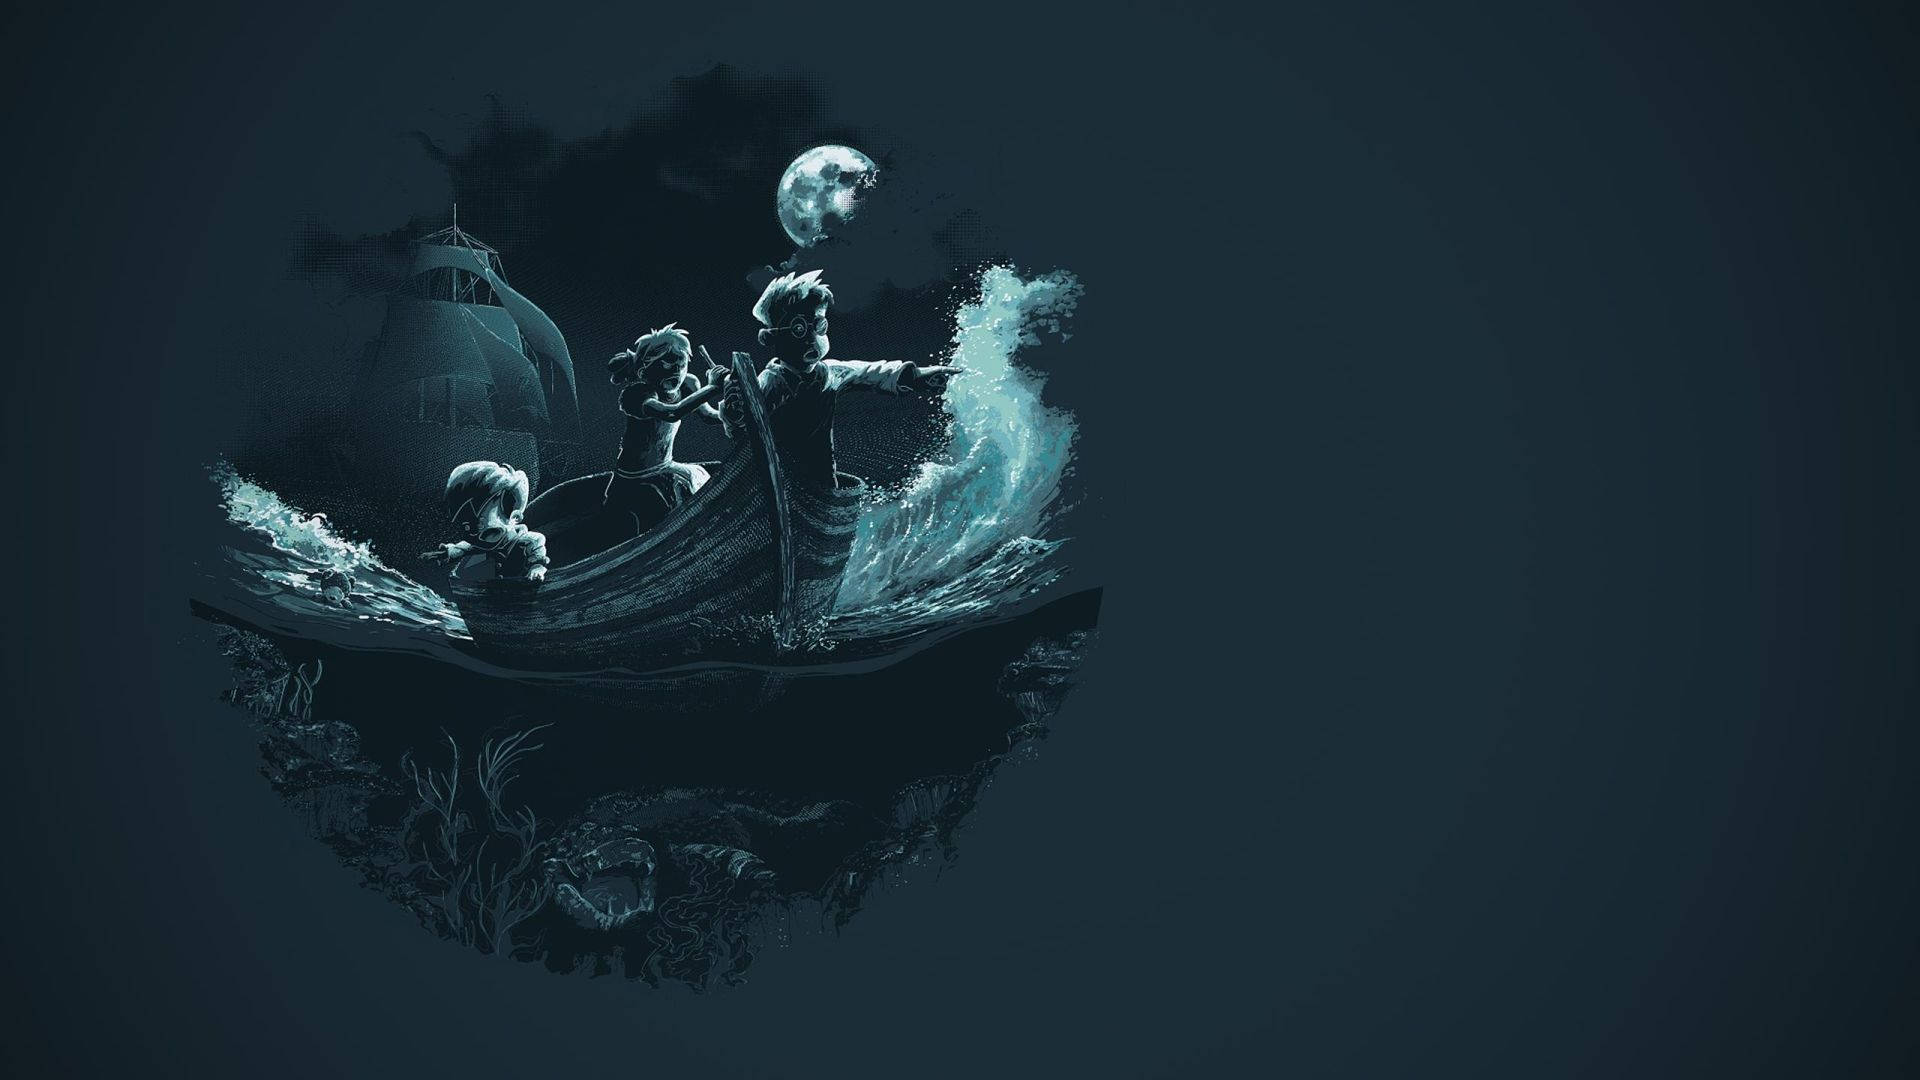 Peter Pan Ghost Ship